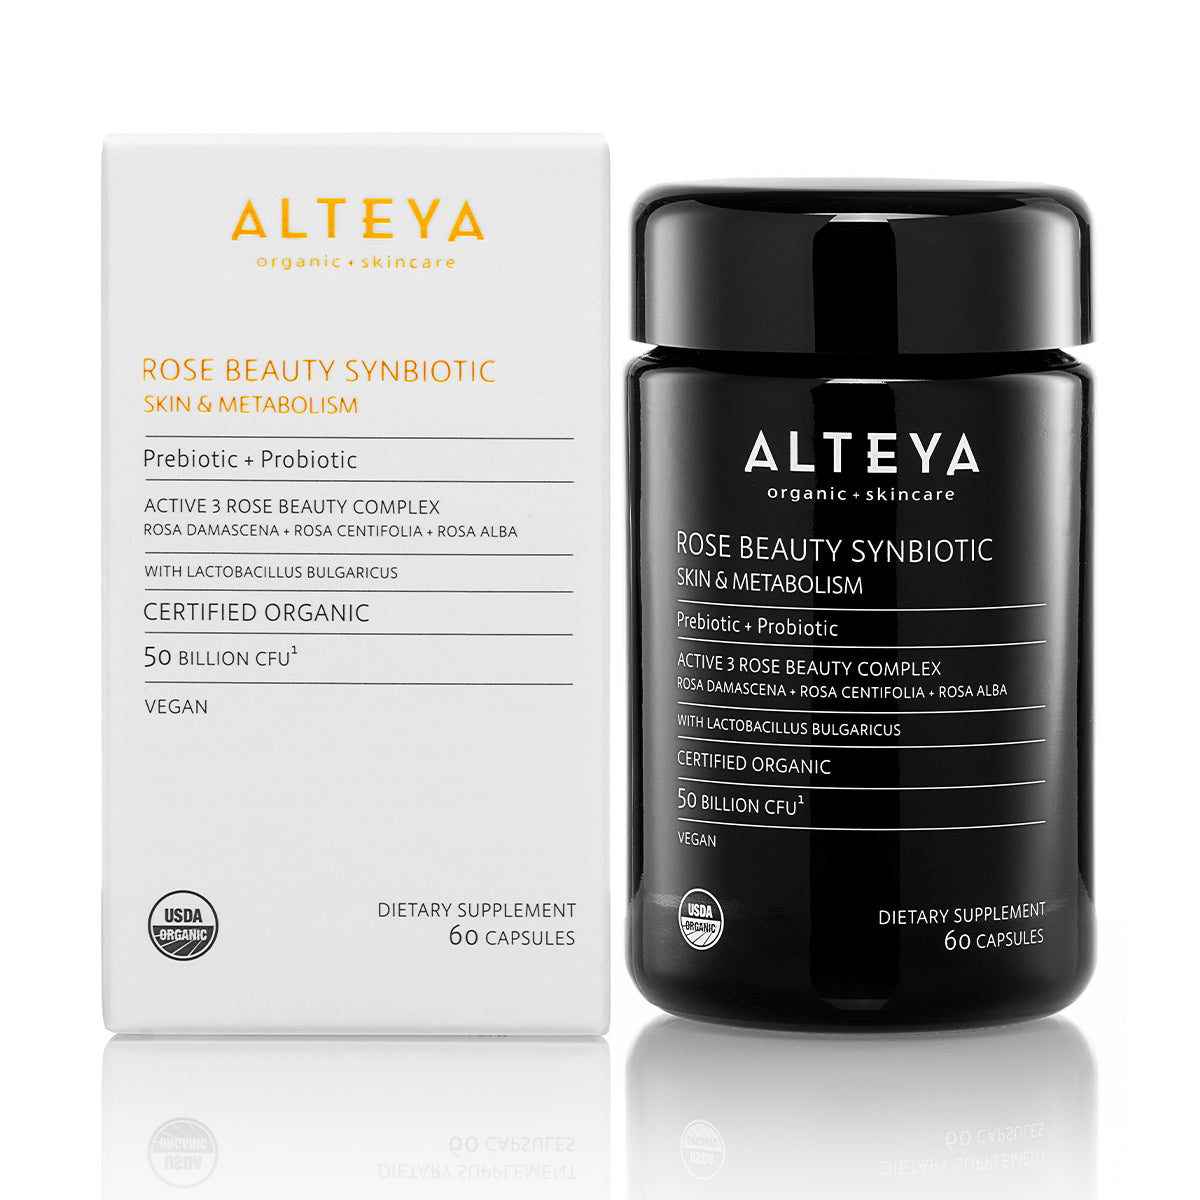 The Alteya Organics Rose Beauty Prebiotic and Probiotic - Synbiotic Skin & Metabolism Vegan Organic Supplement promotes gut health.